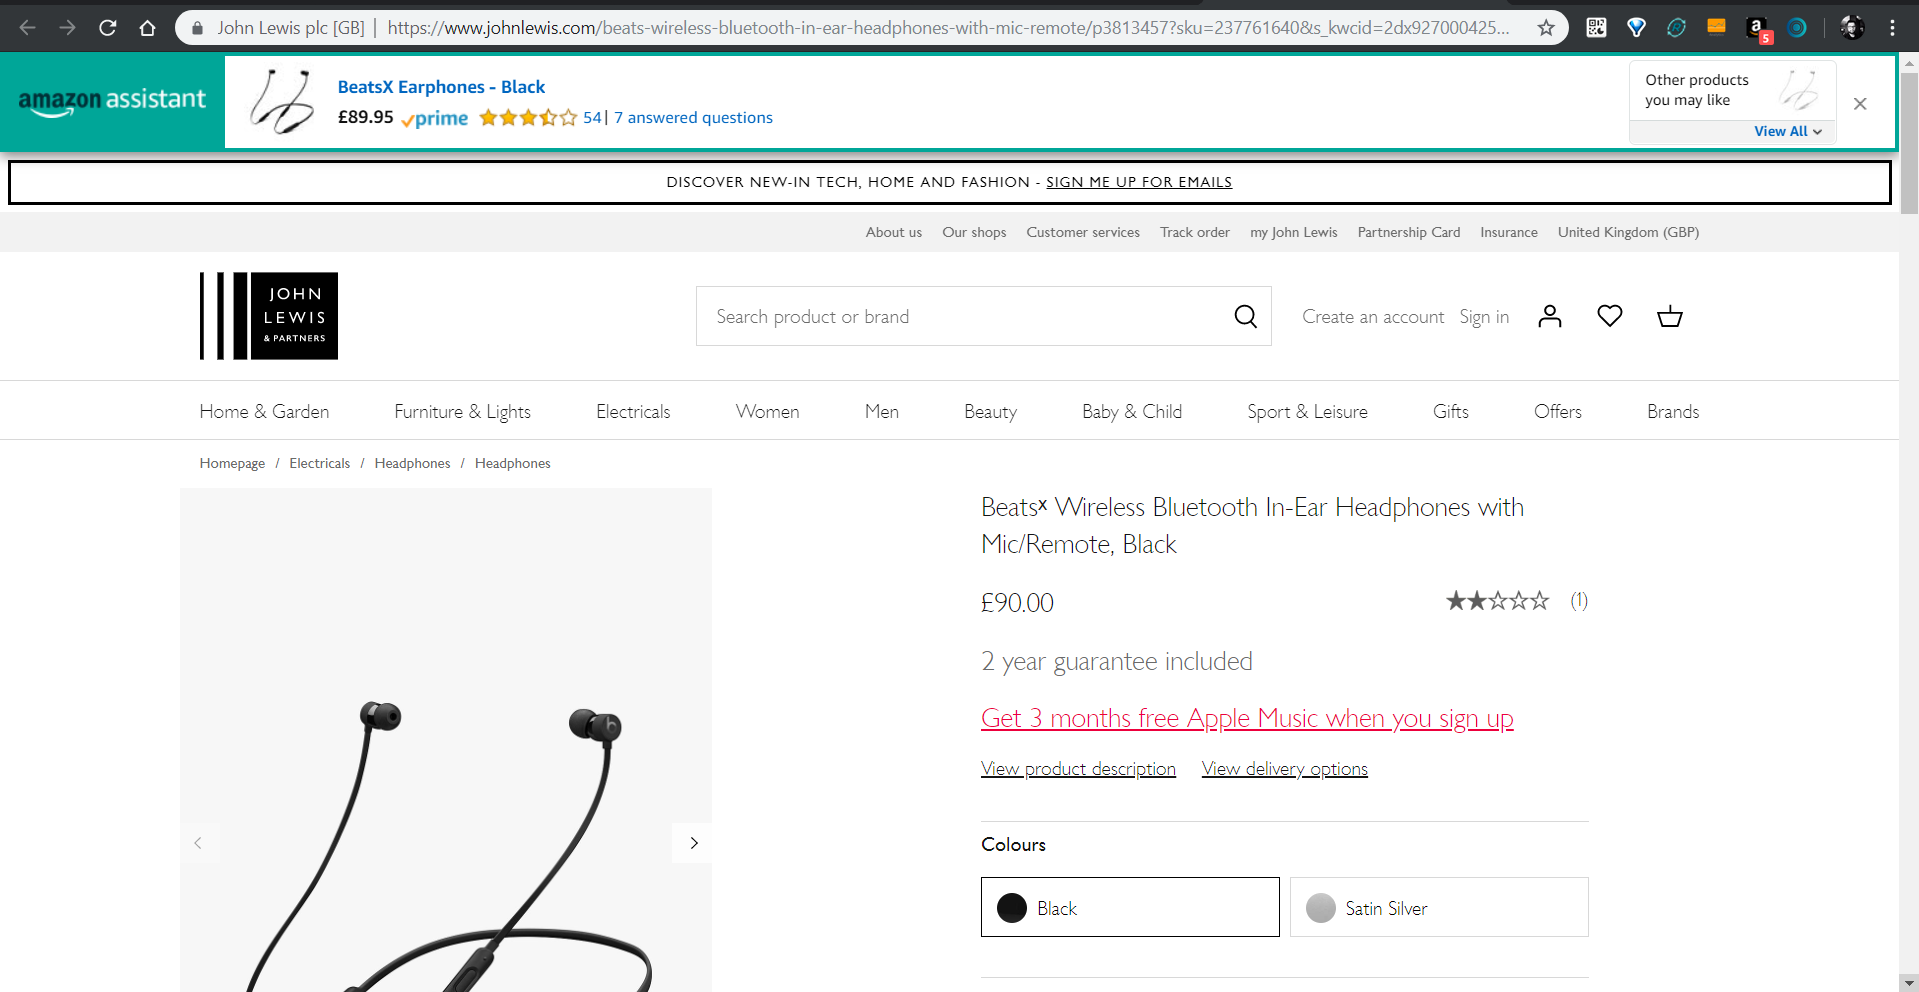 Screenshot taken from the John Lewis website, browsing the Beats X wireless earphones with Amazon Assistant banner 